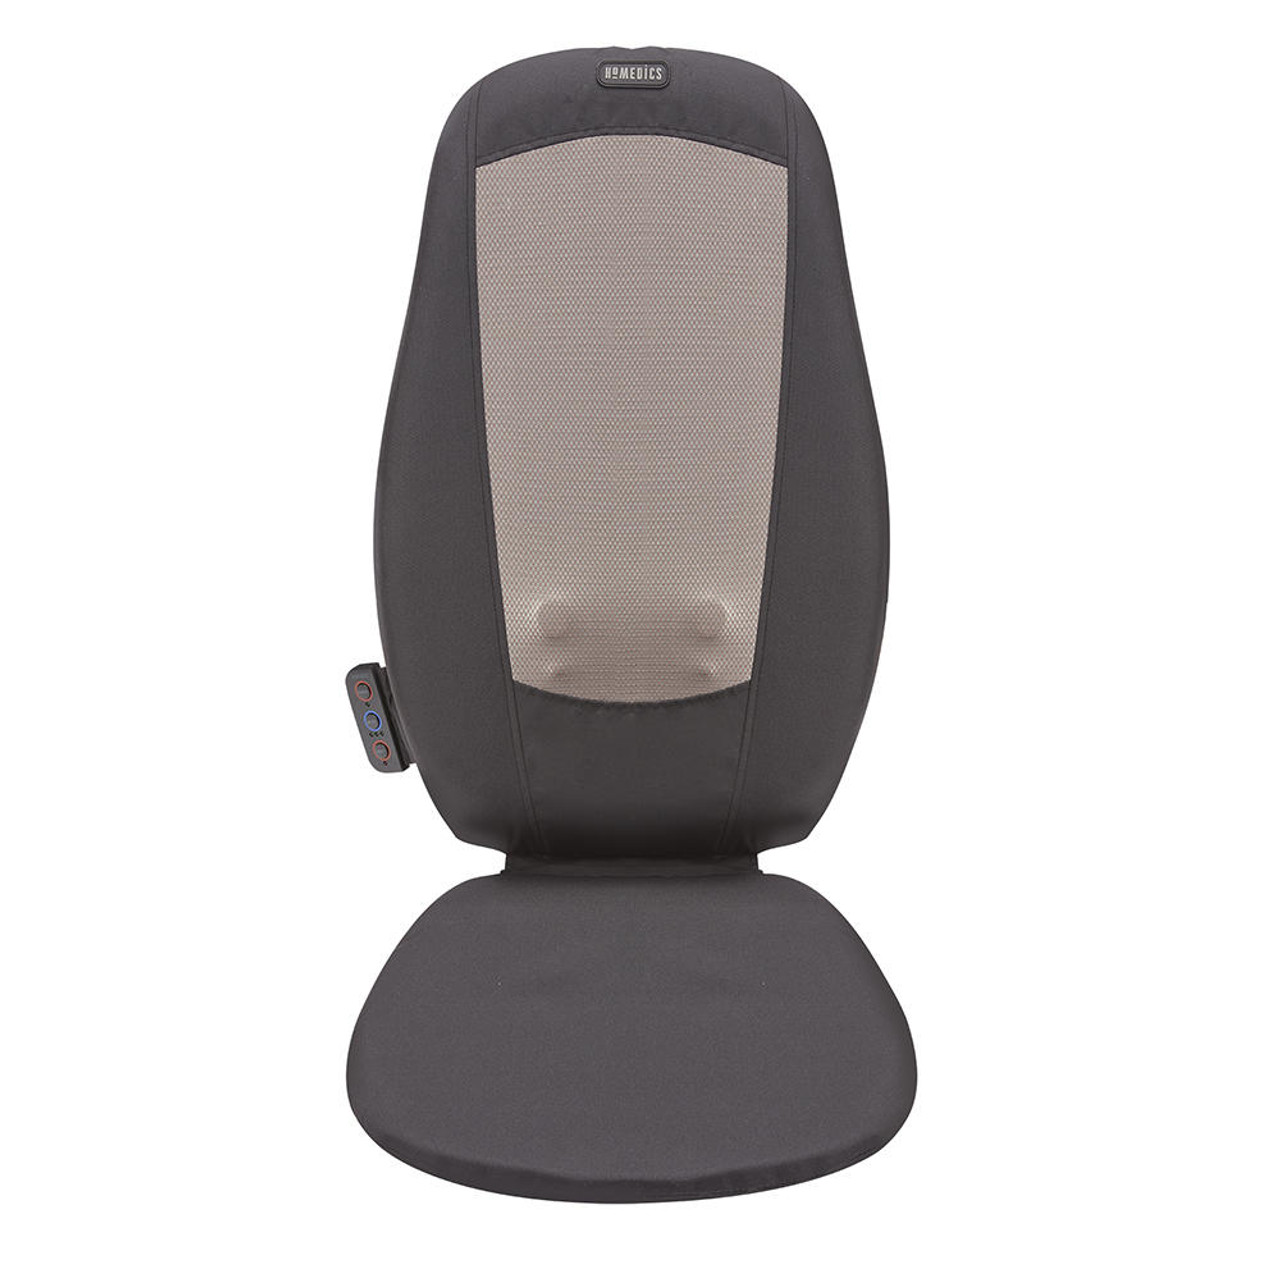 Homedics Shiatsu Back Massager / Massaging Cushion Seat - Review and Demo 